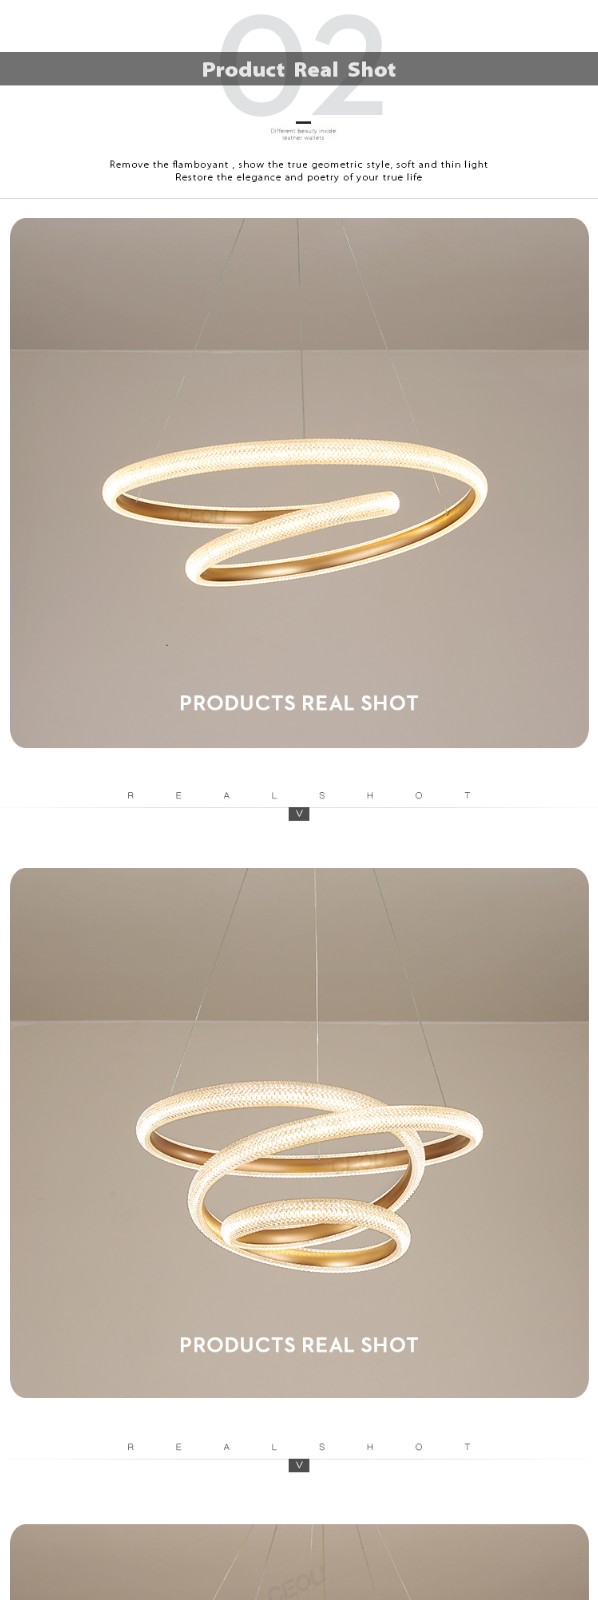 product-2020 new design luxury chandelier living room lamp modern creative artist led Nordic lamps-C